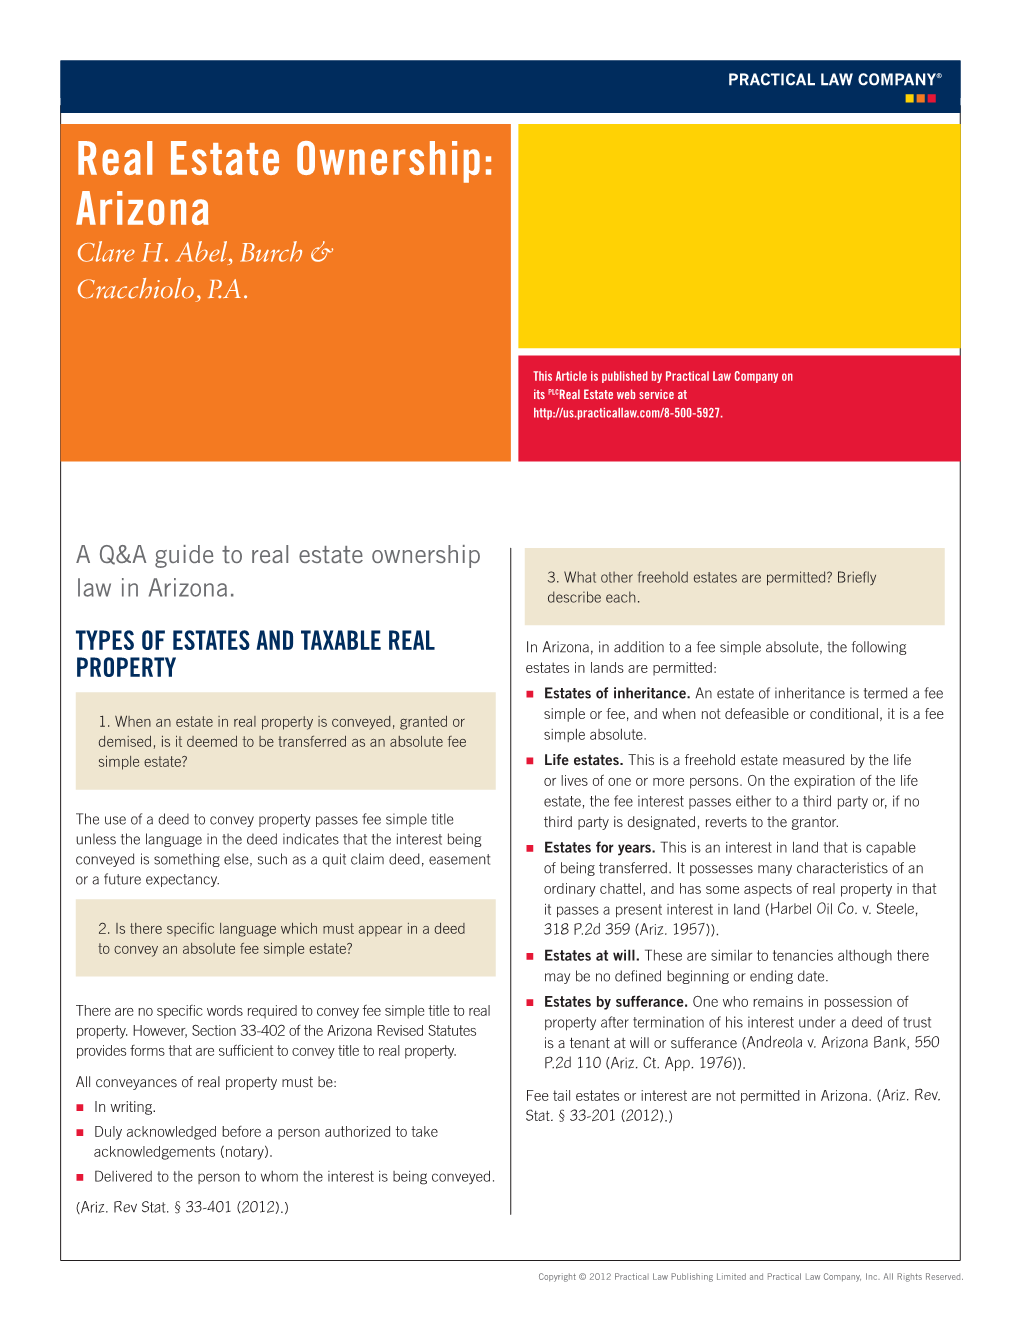 Real Estate Ownership: Arizona Clare H